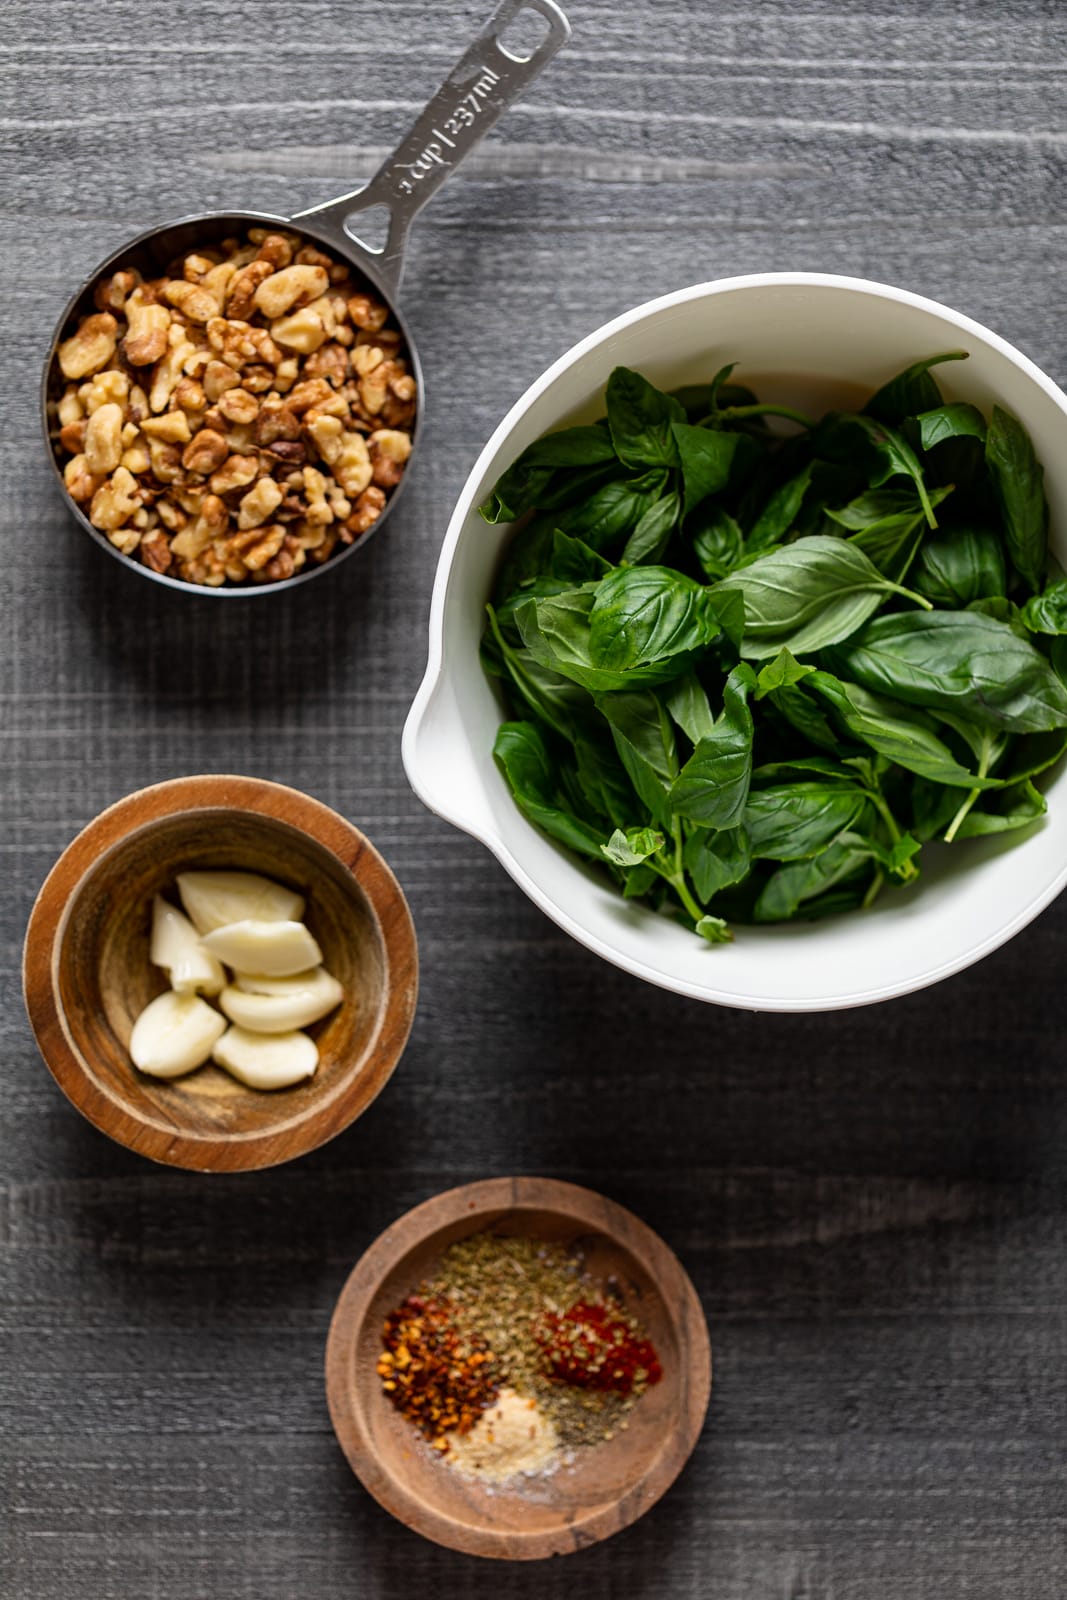 Ingredients for Walnut Pesto Bucatini Pasta including basil, garlic, and walnuts